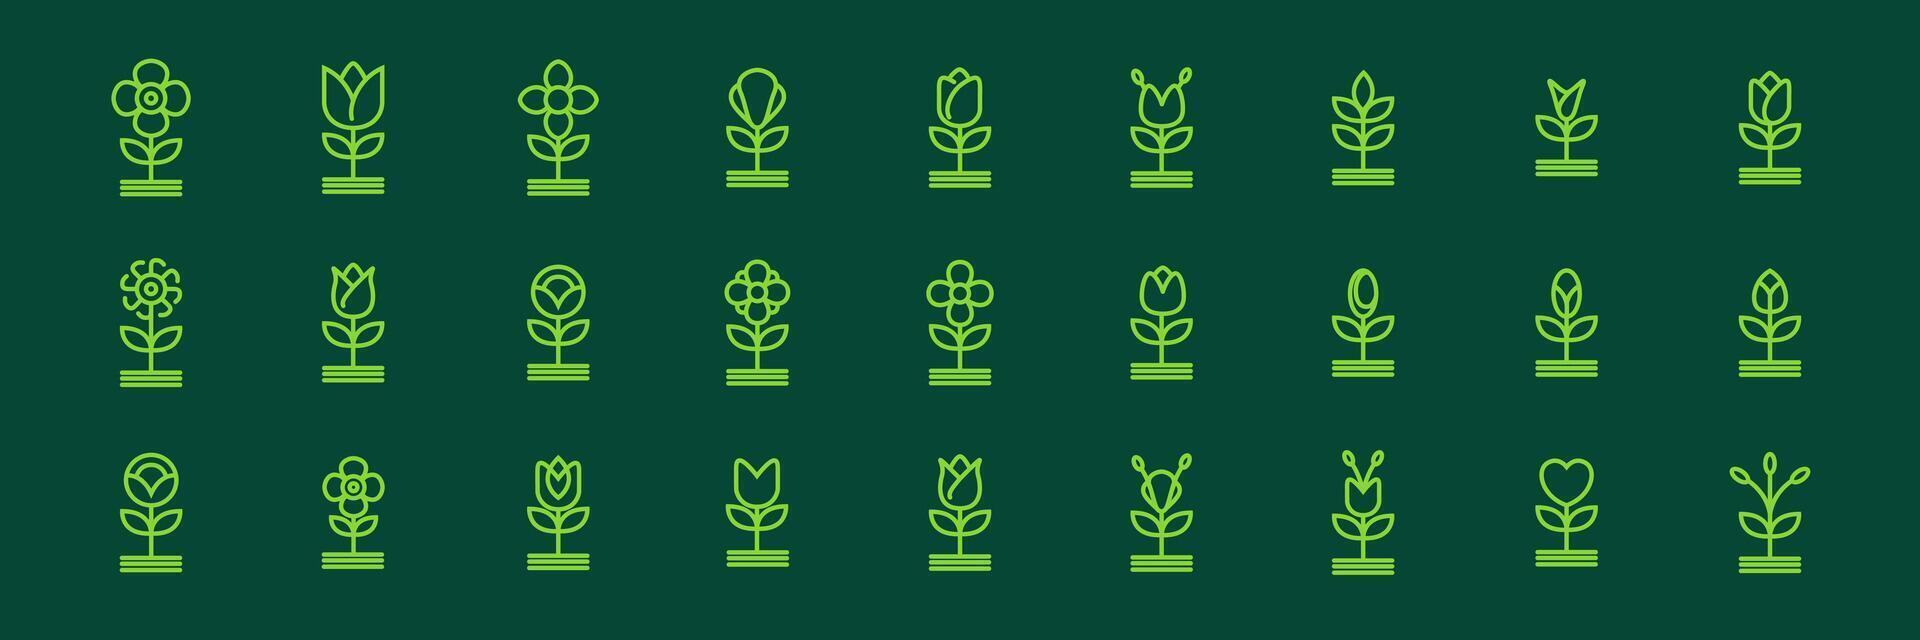 verde planta flor botánico línea sencillo moderno mínimo icono conjunto colección logo diseño vector ilustración